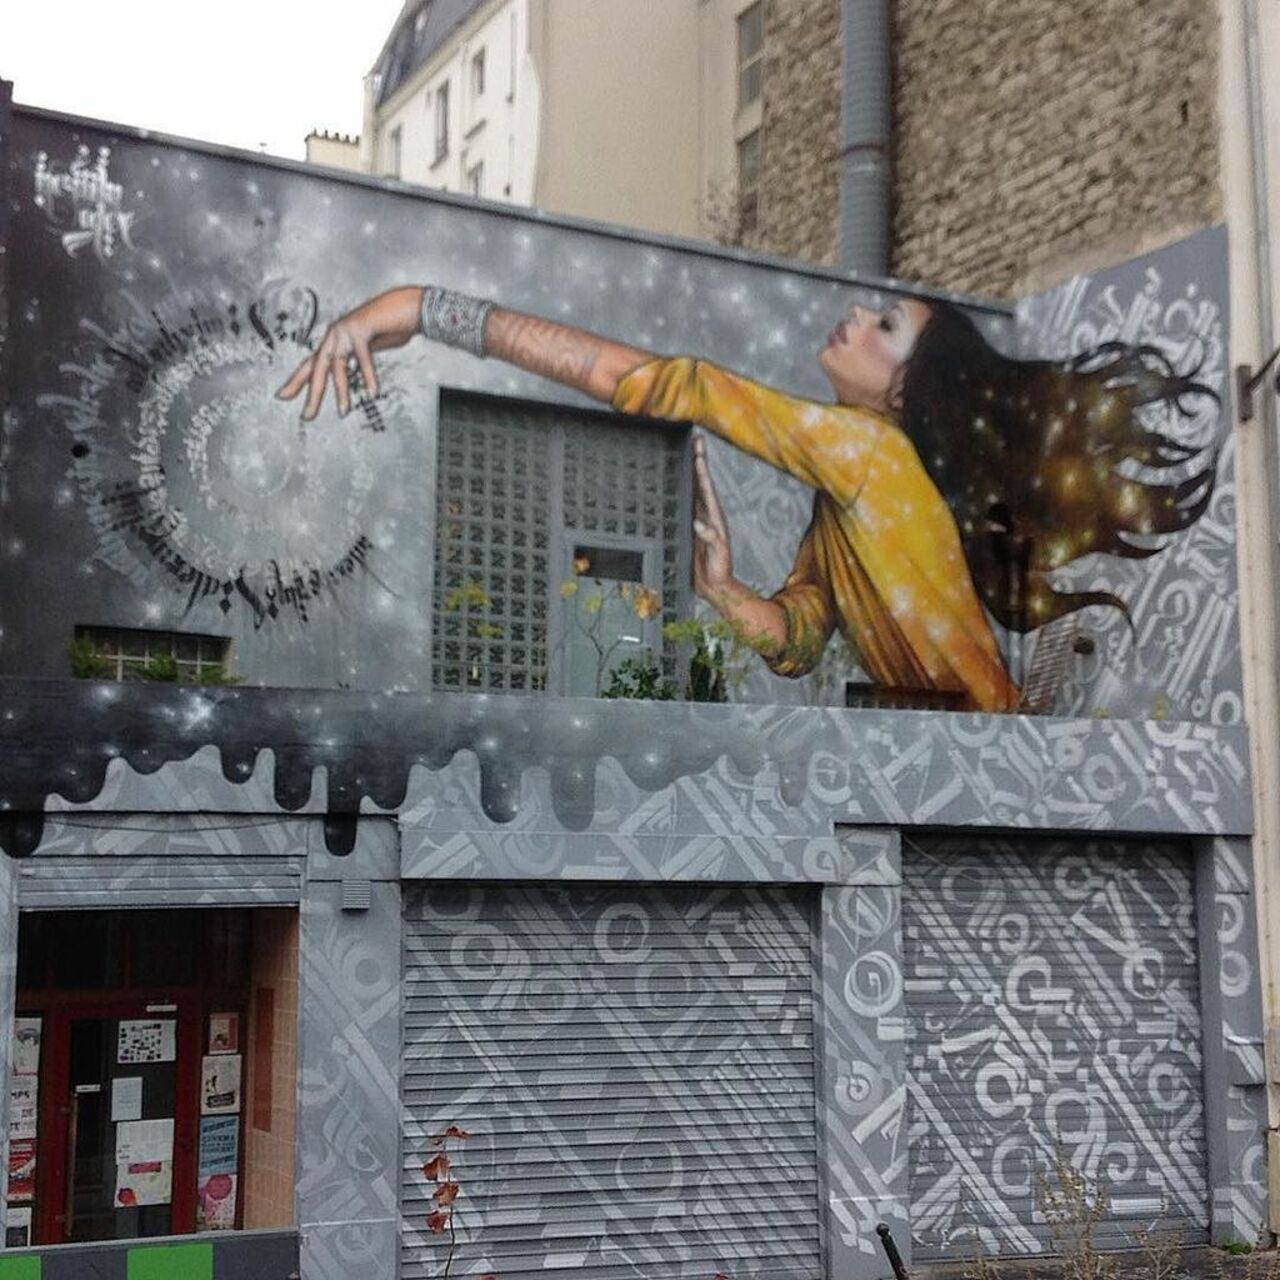 RT @StArtEverywhere: La maison enchantée #street #streetart #streetartparis #graff #graffiti #wallart #sprayart #urban #urban #urbain #u… https://t.co/5Qedo2Eap0